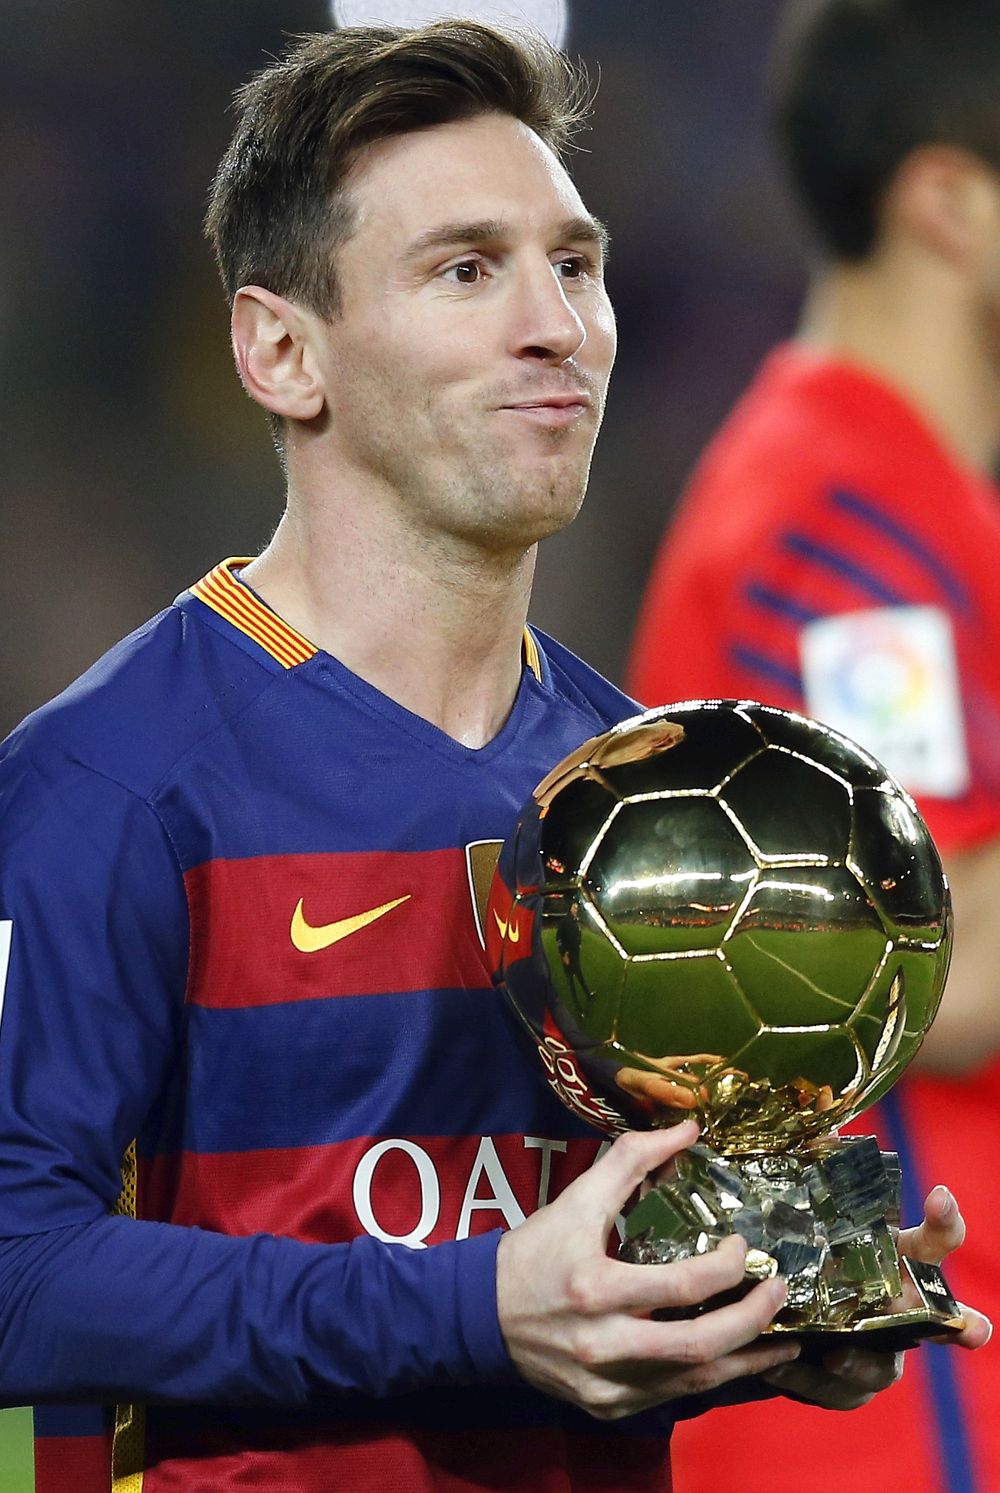 Lionel Messi Won The Award